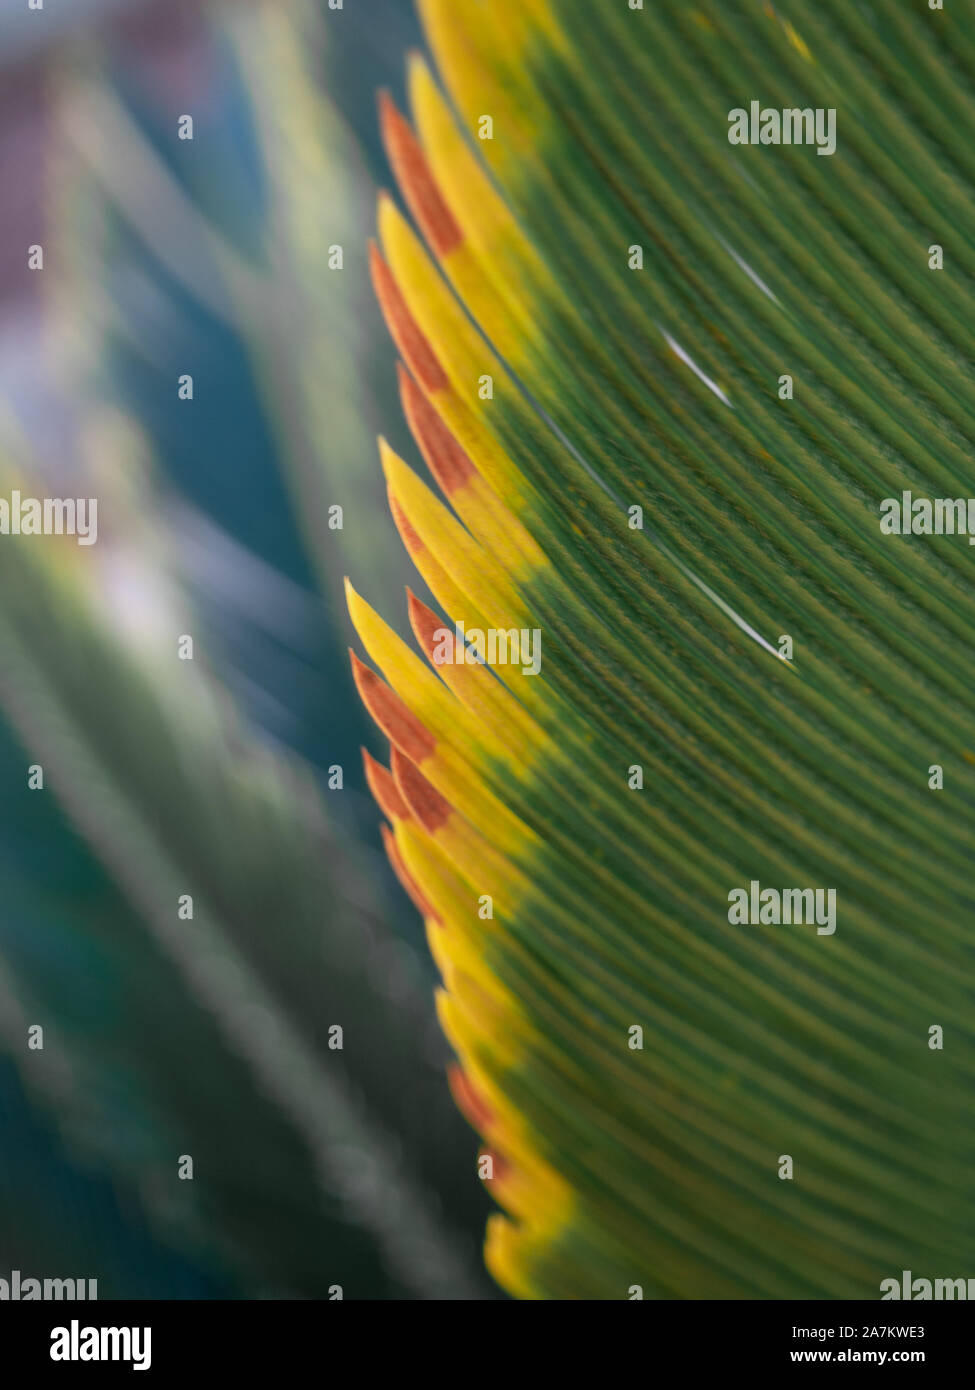 Leaf of Cycas revoluta or sago palm Stock Photo